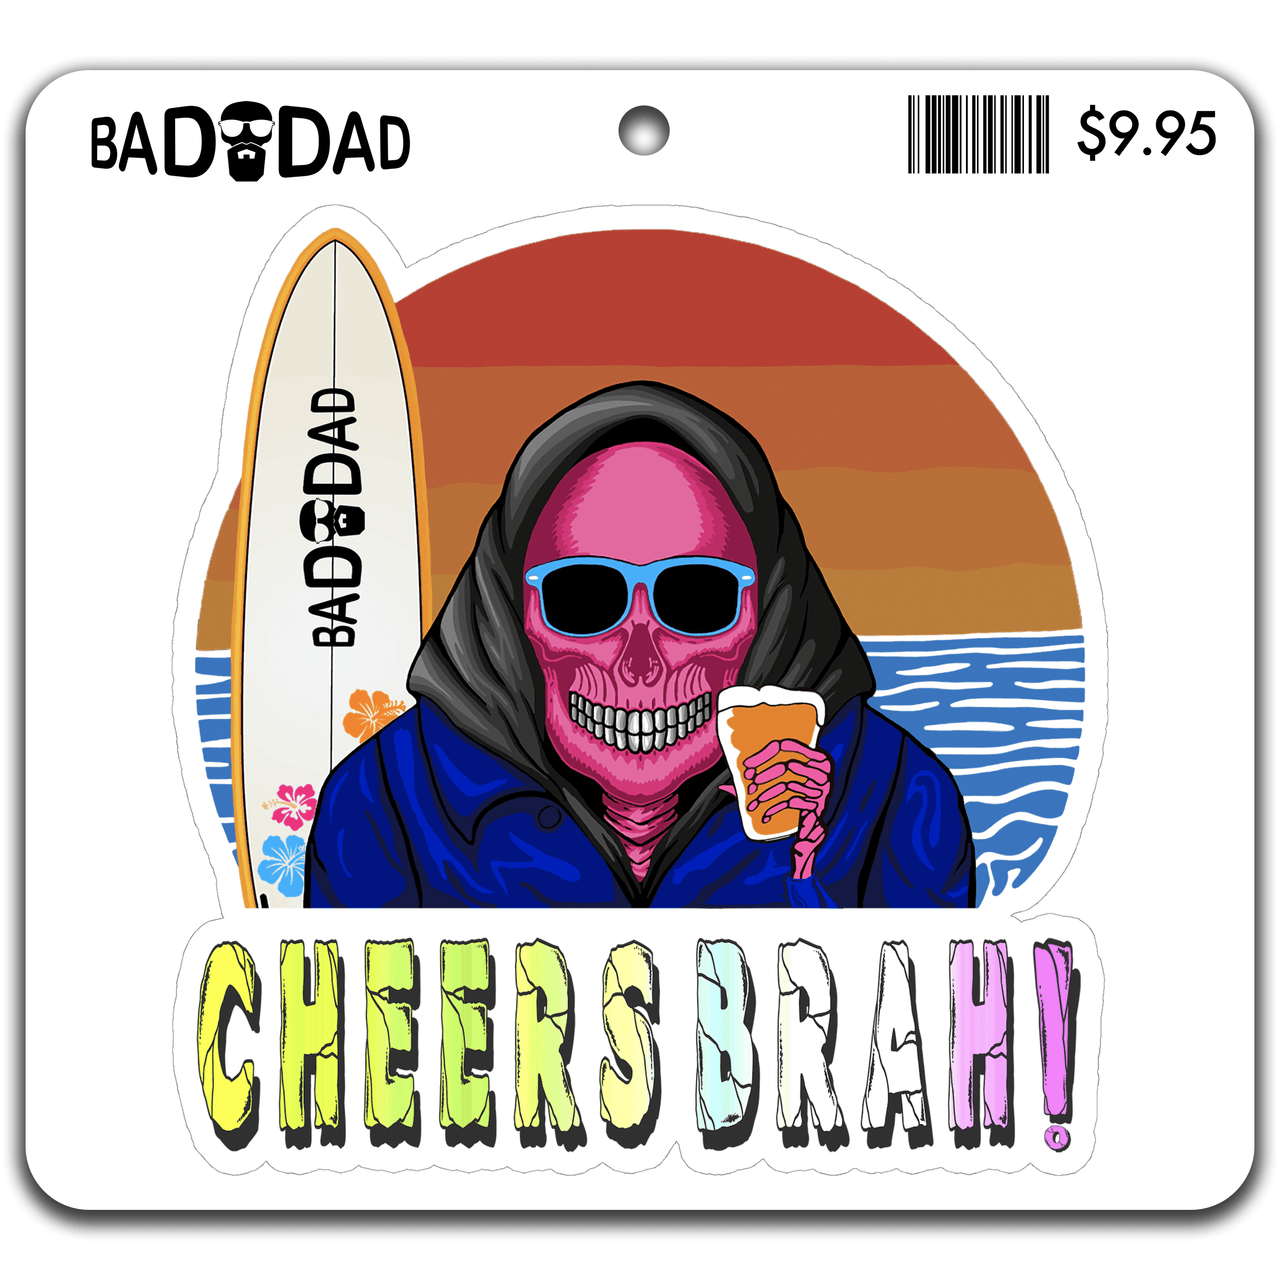 Cheers Brah Sticker